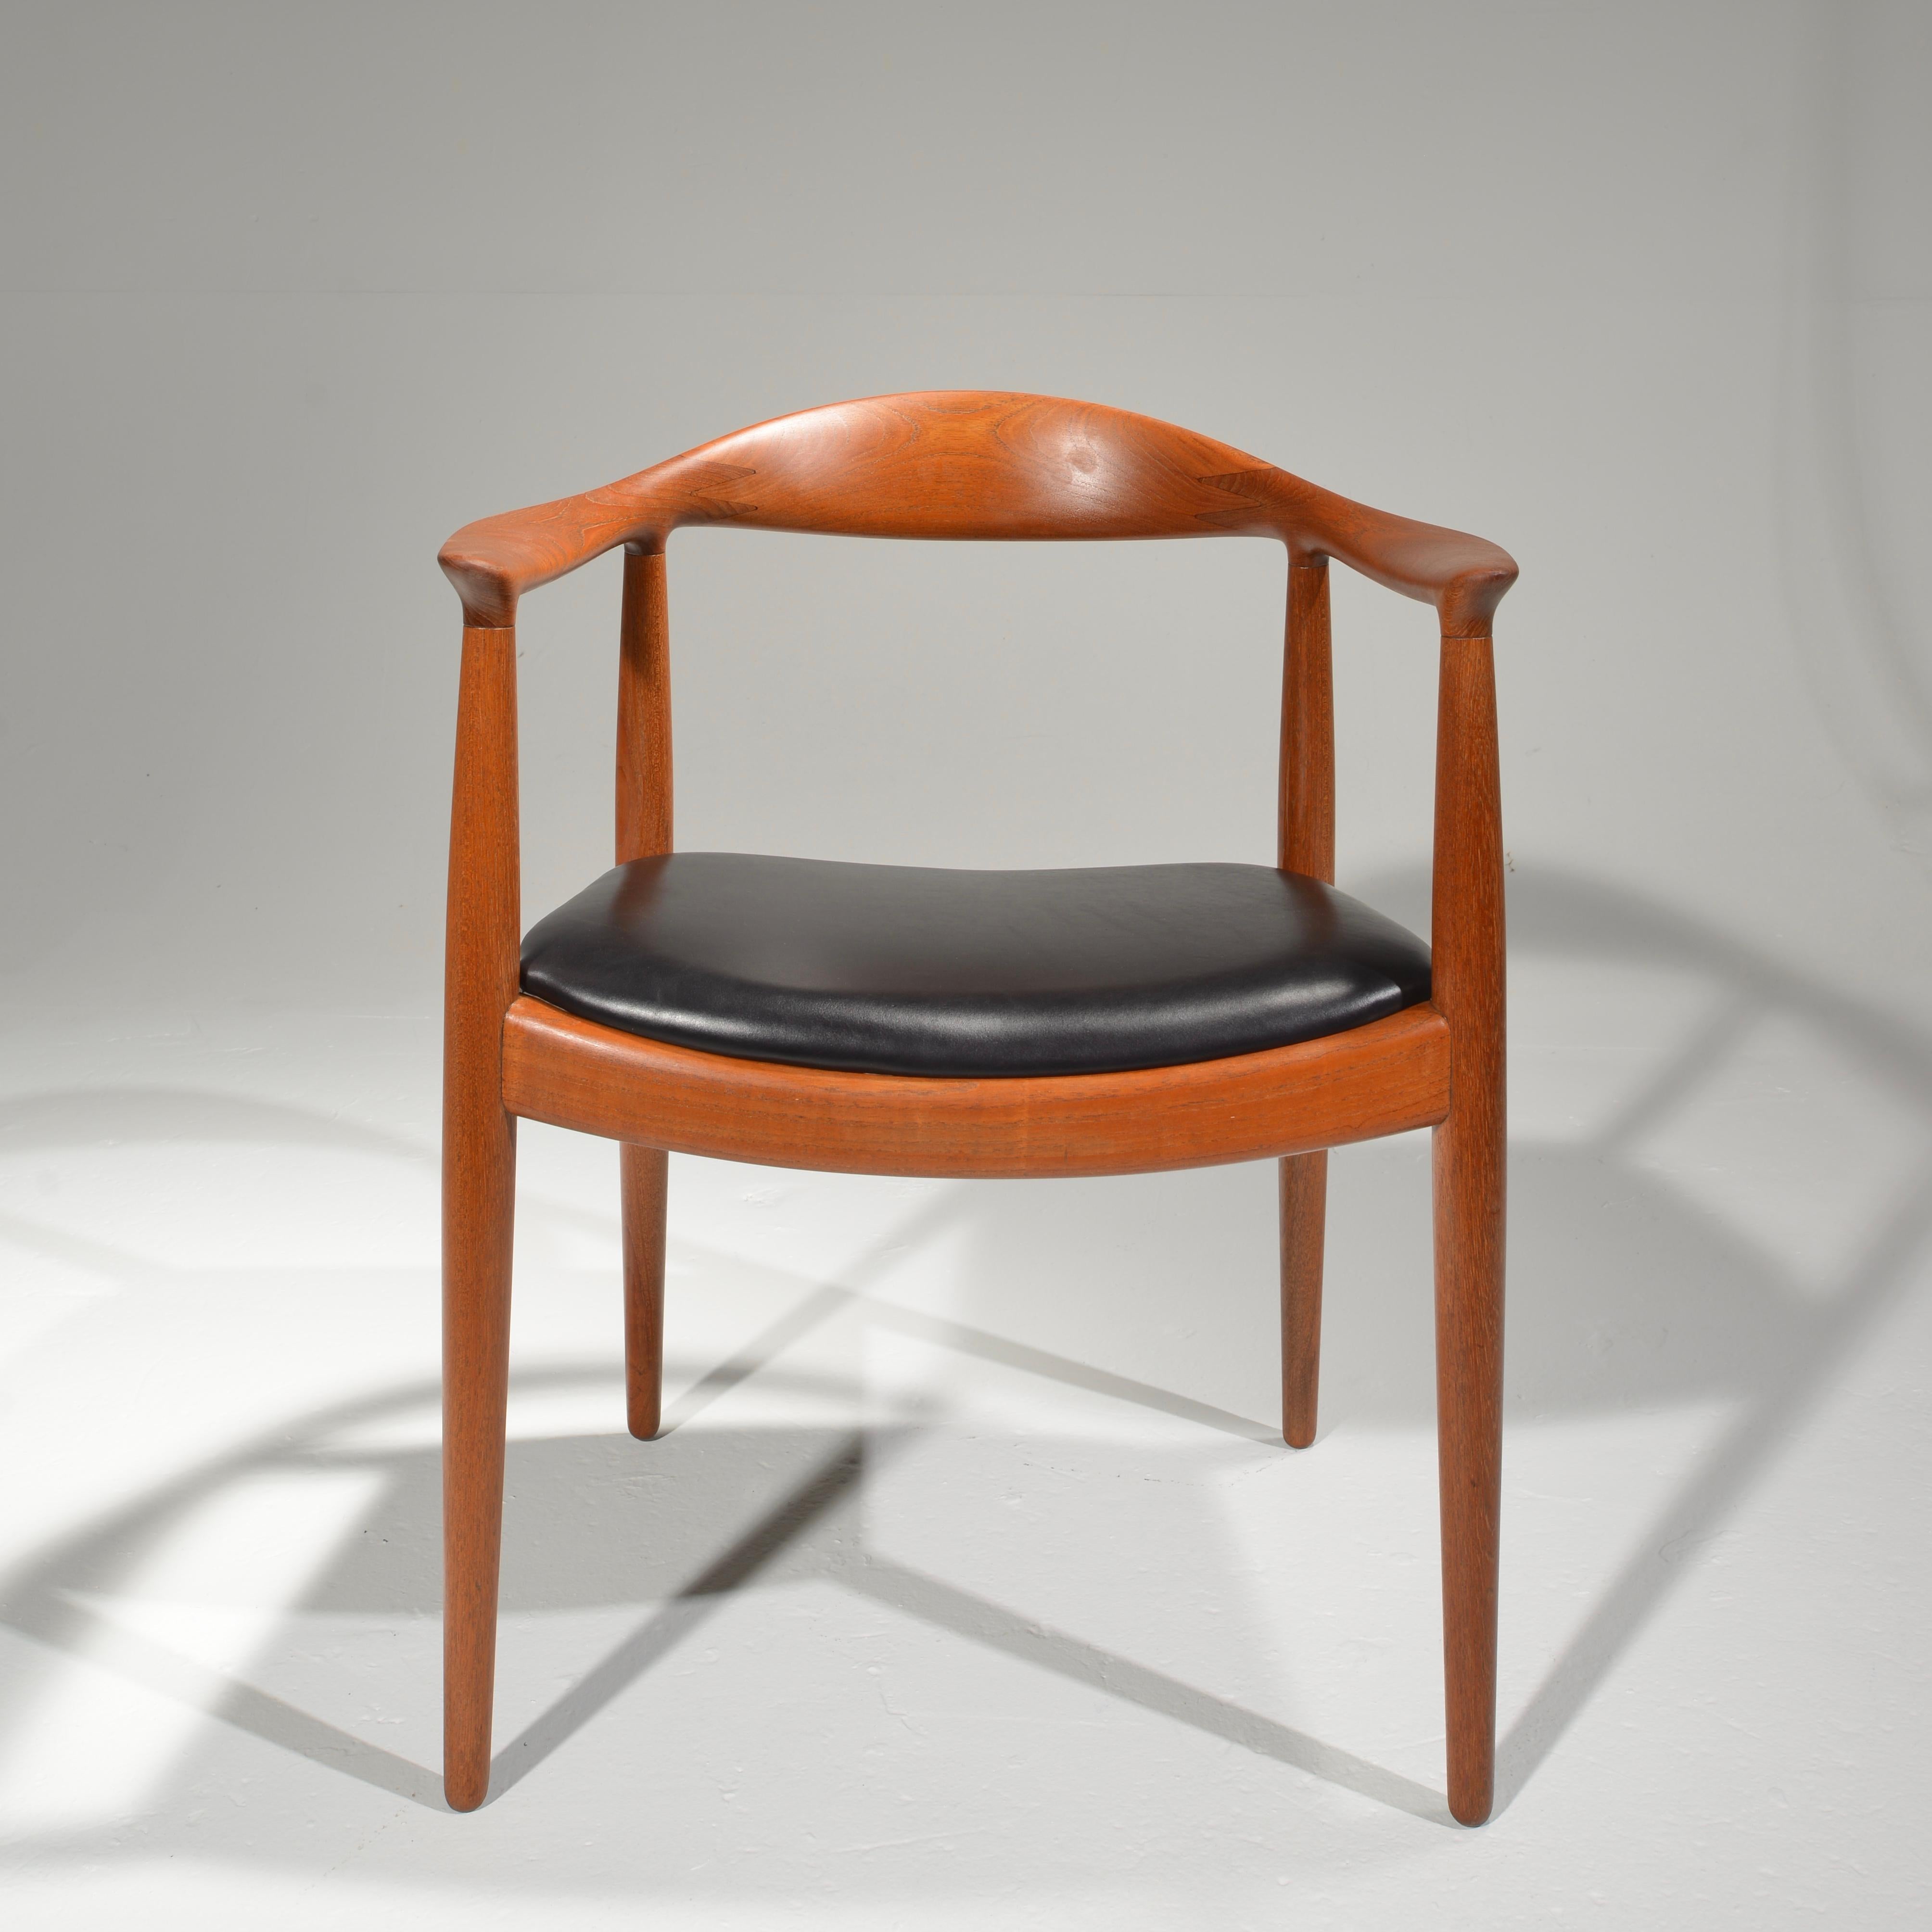 5 Hans Wegner for Johannes Hansen JH-503 Chairs in Teak and Leather For Sale 7